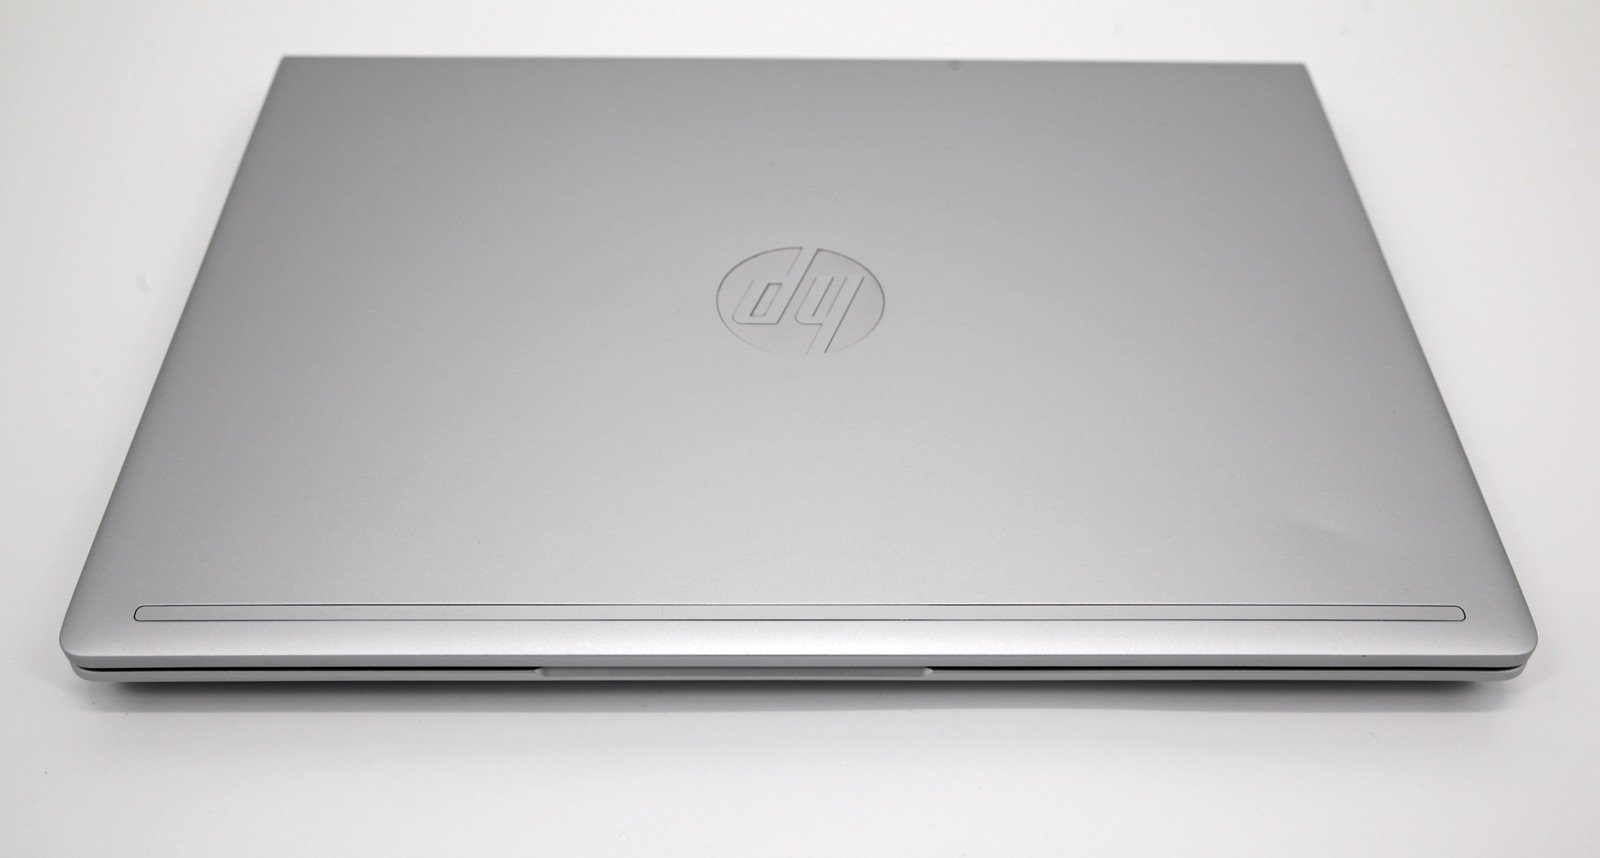 HP ProBook 430 G6 13.3" Touch Laptop: 512GB SSD, 8th Gen i5, 8GB Warranty 1.49kg - CruiseTech